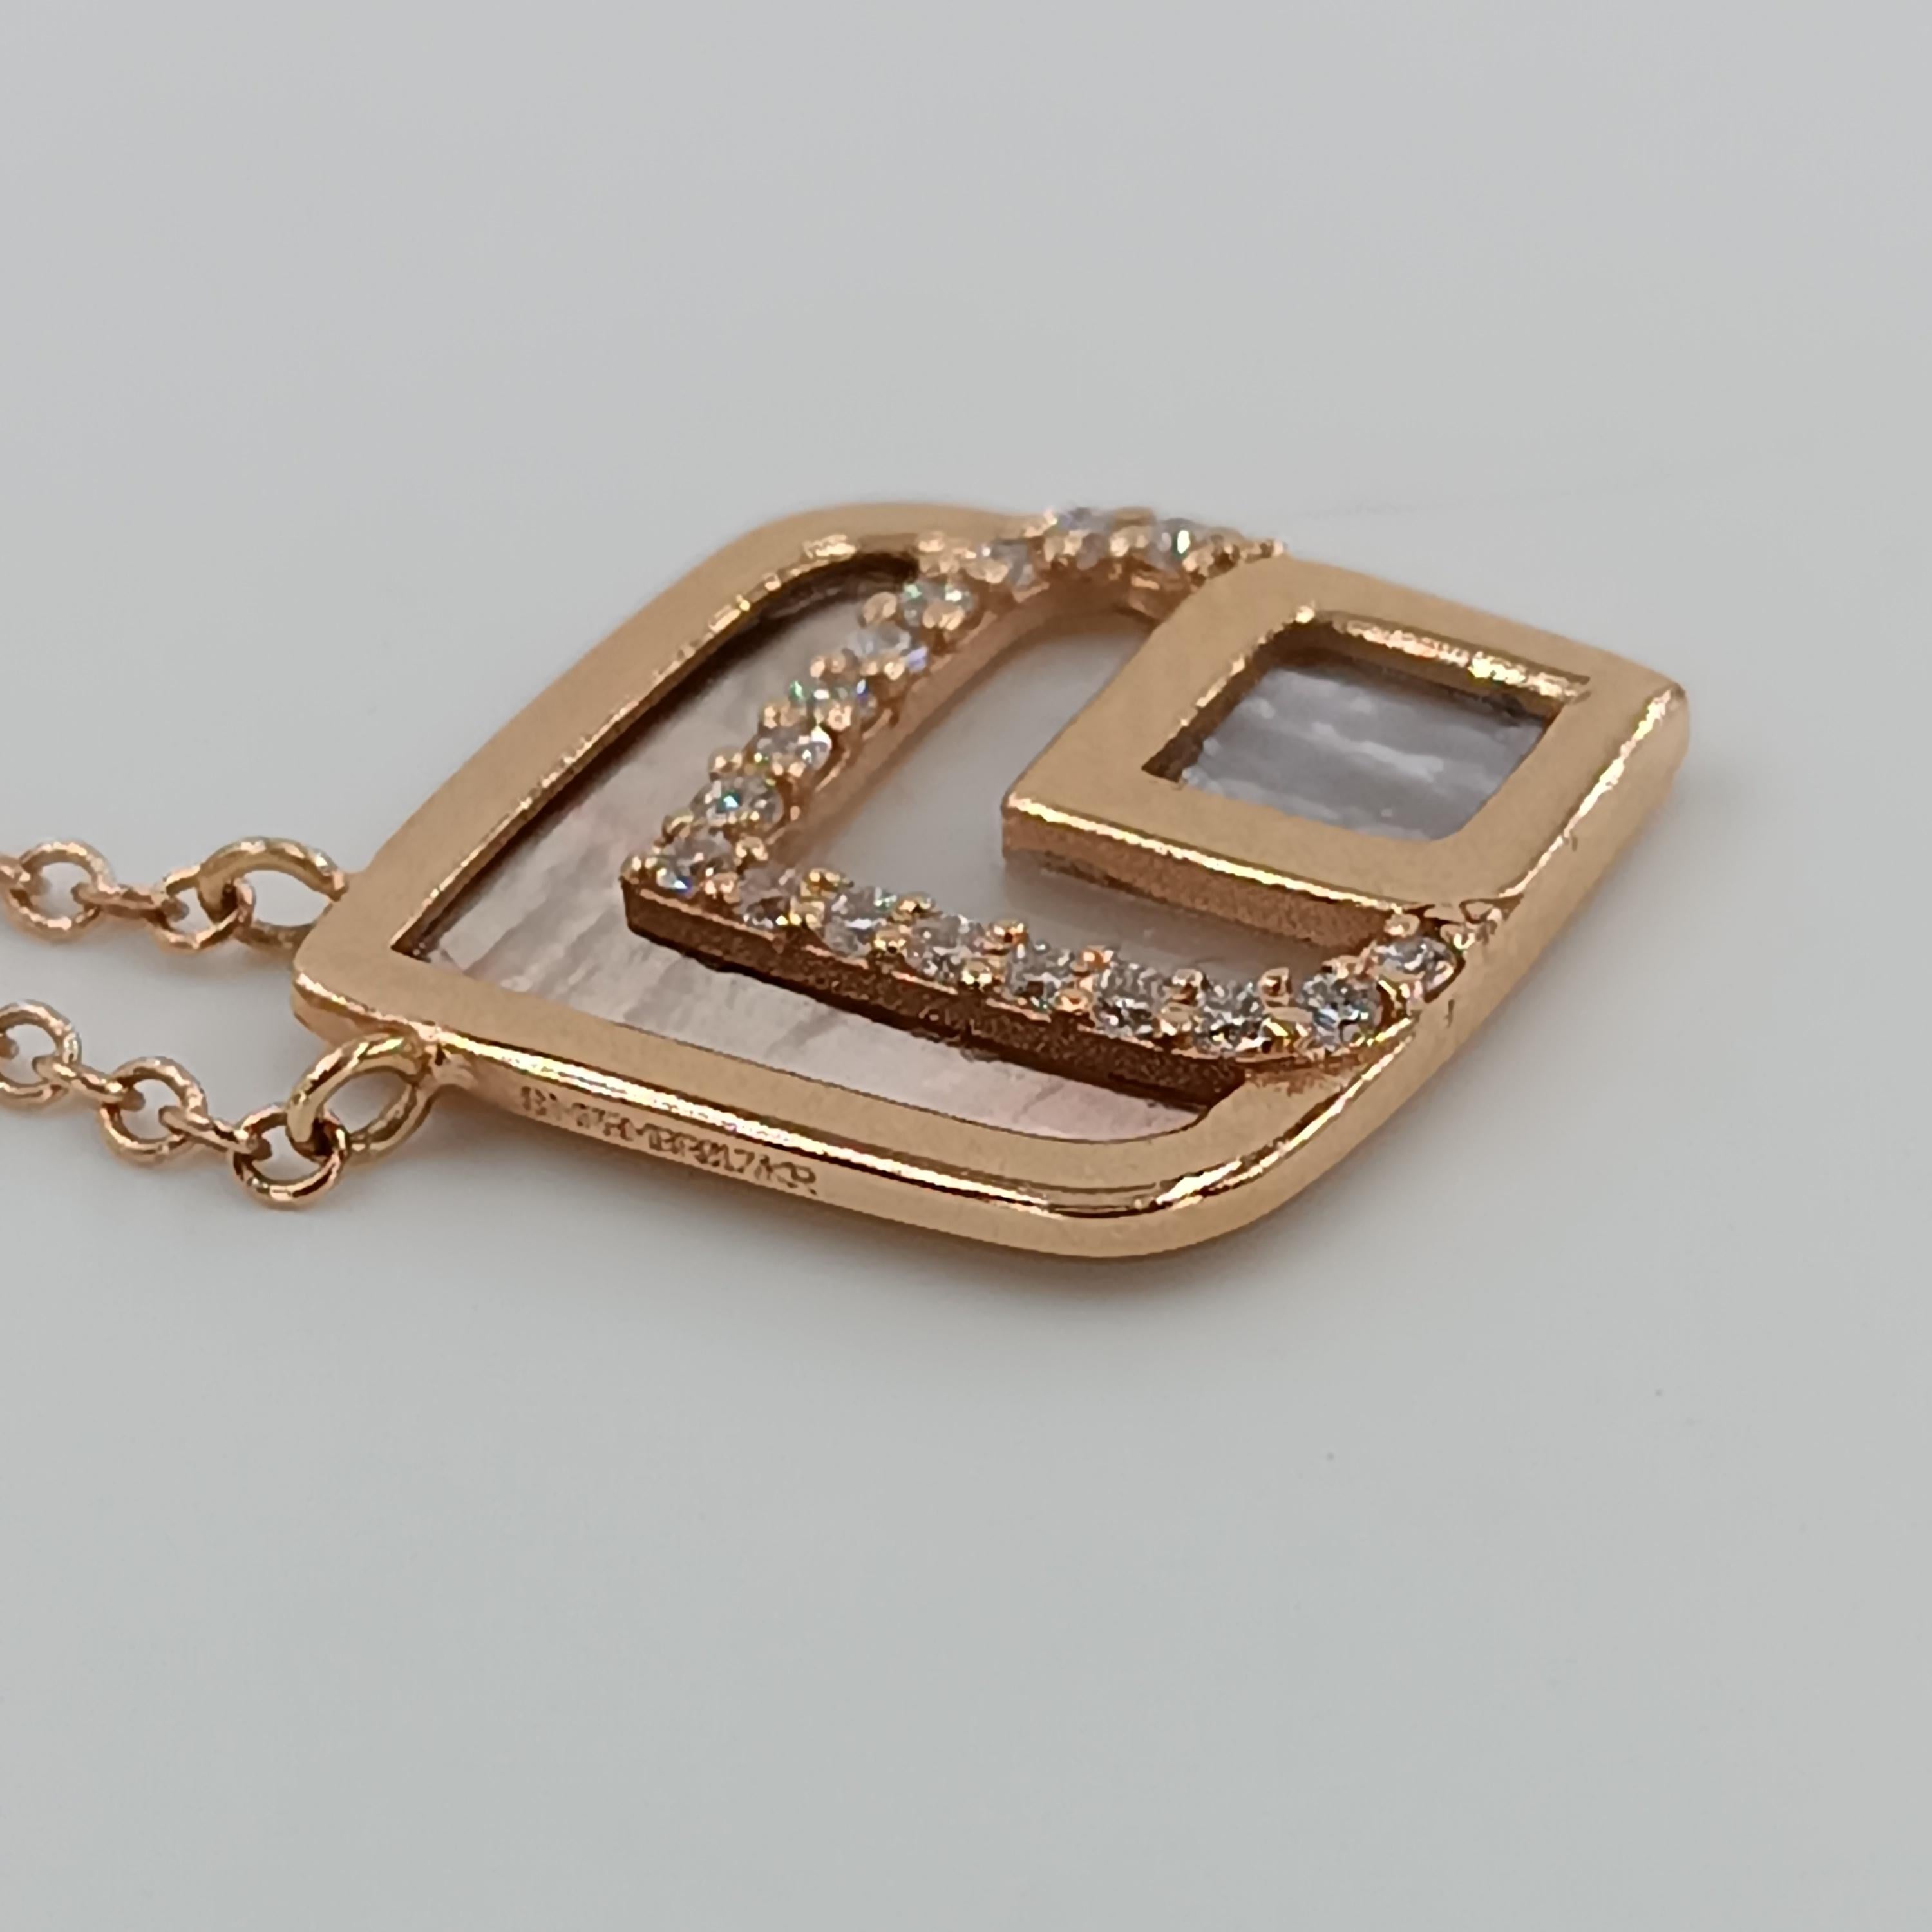 14k gold leo necklace